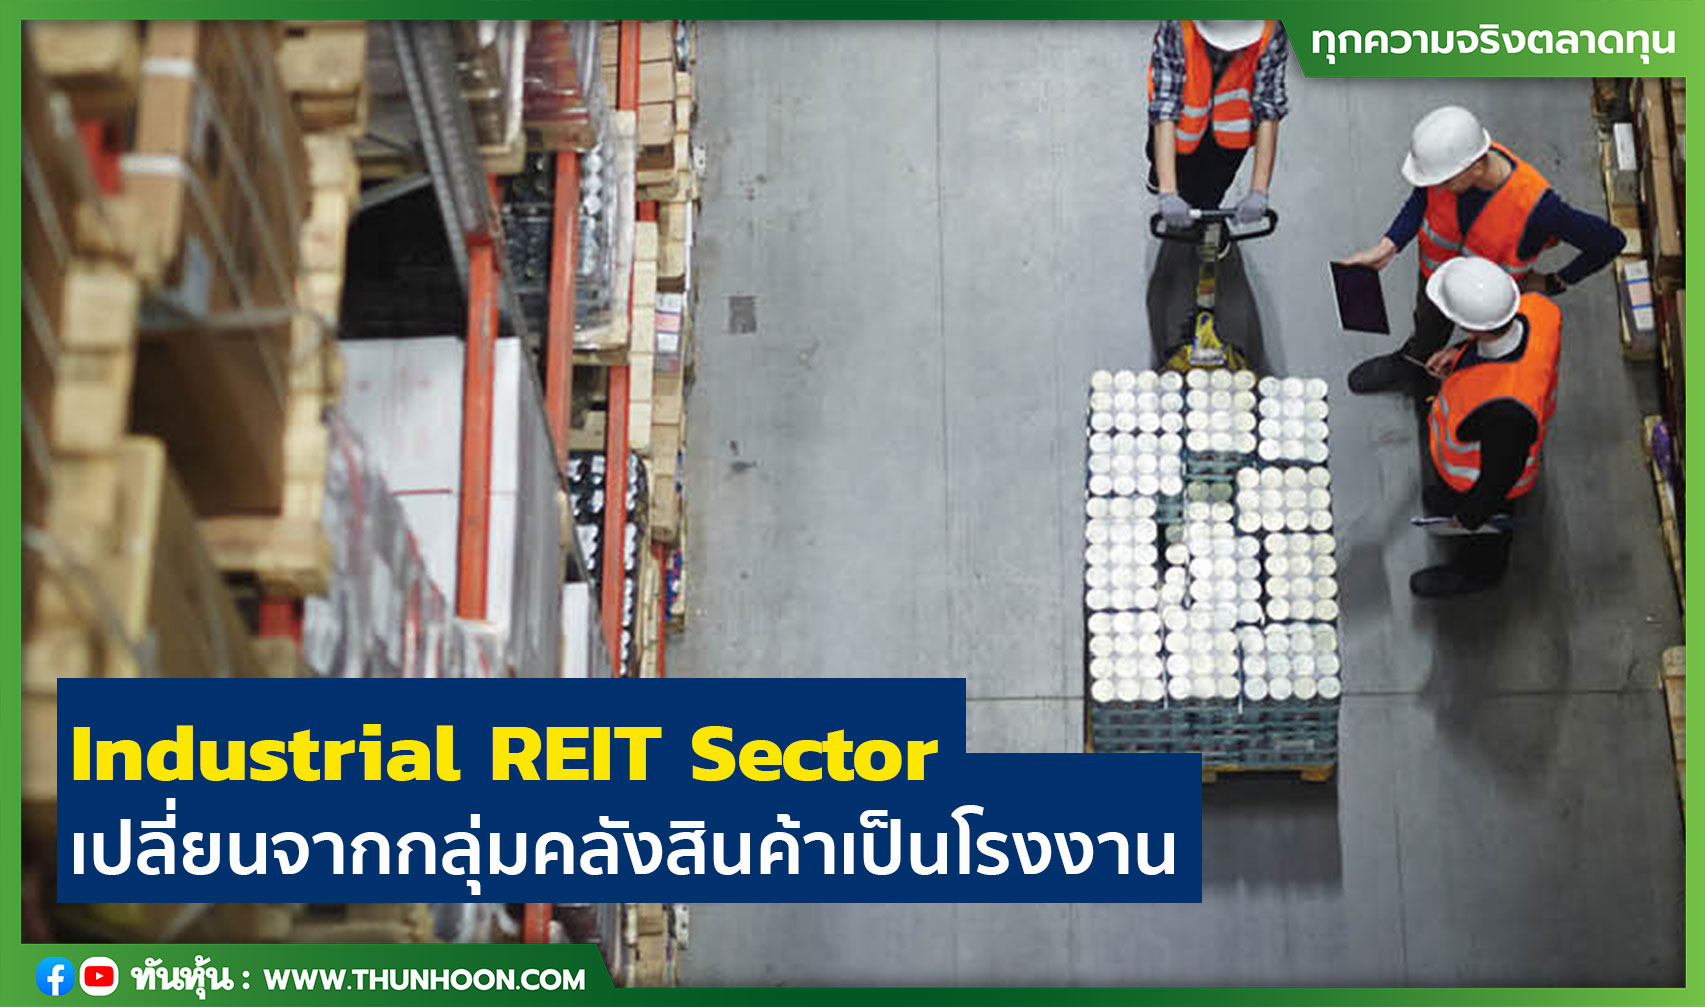 Industrial REIT Sector เปลี่ยนจากกลุ่มคลังสินค้าเป็นโรงงาน